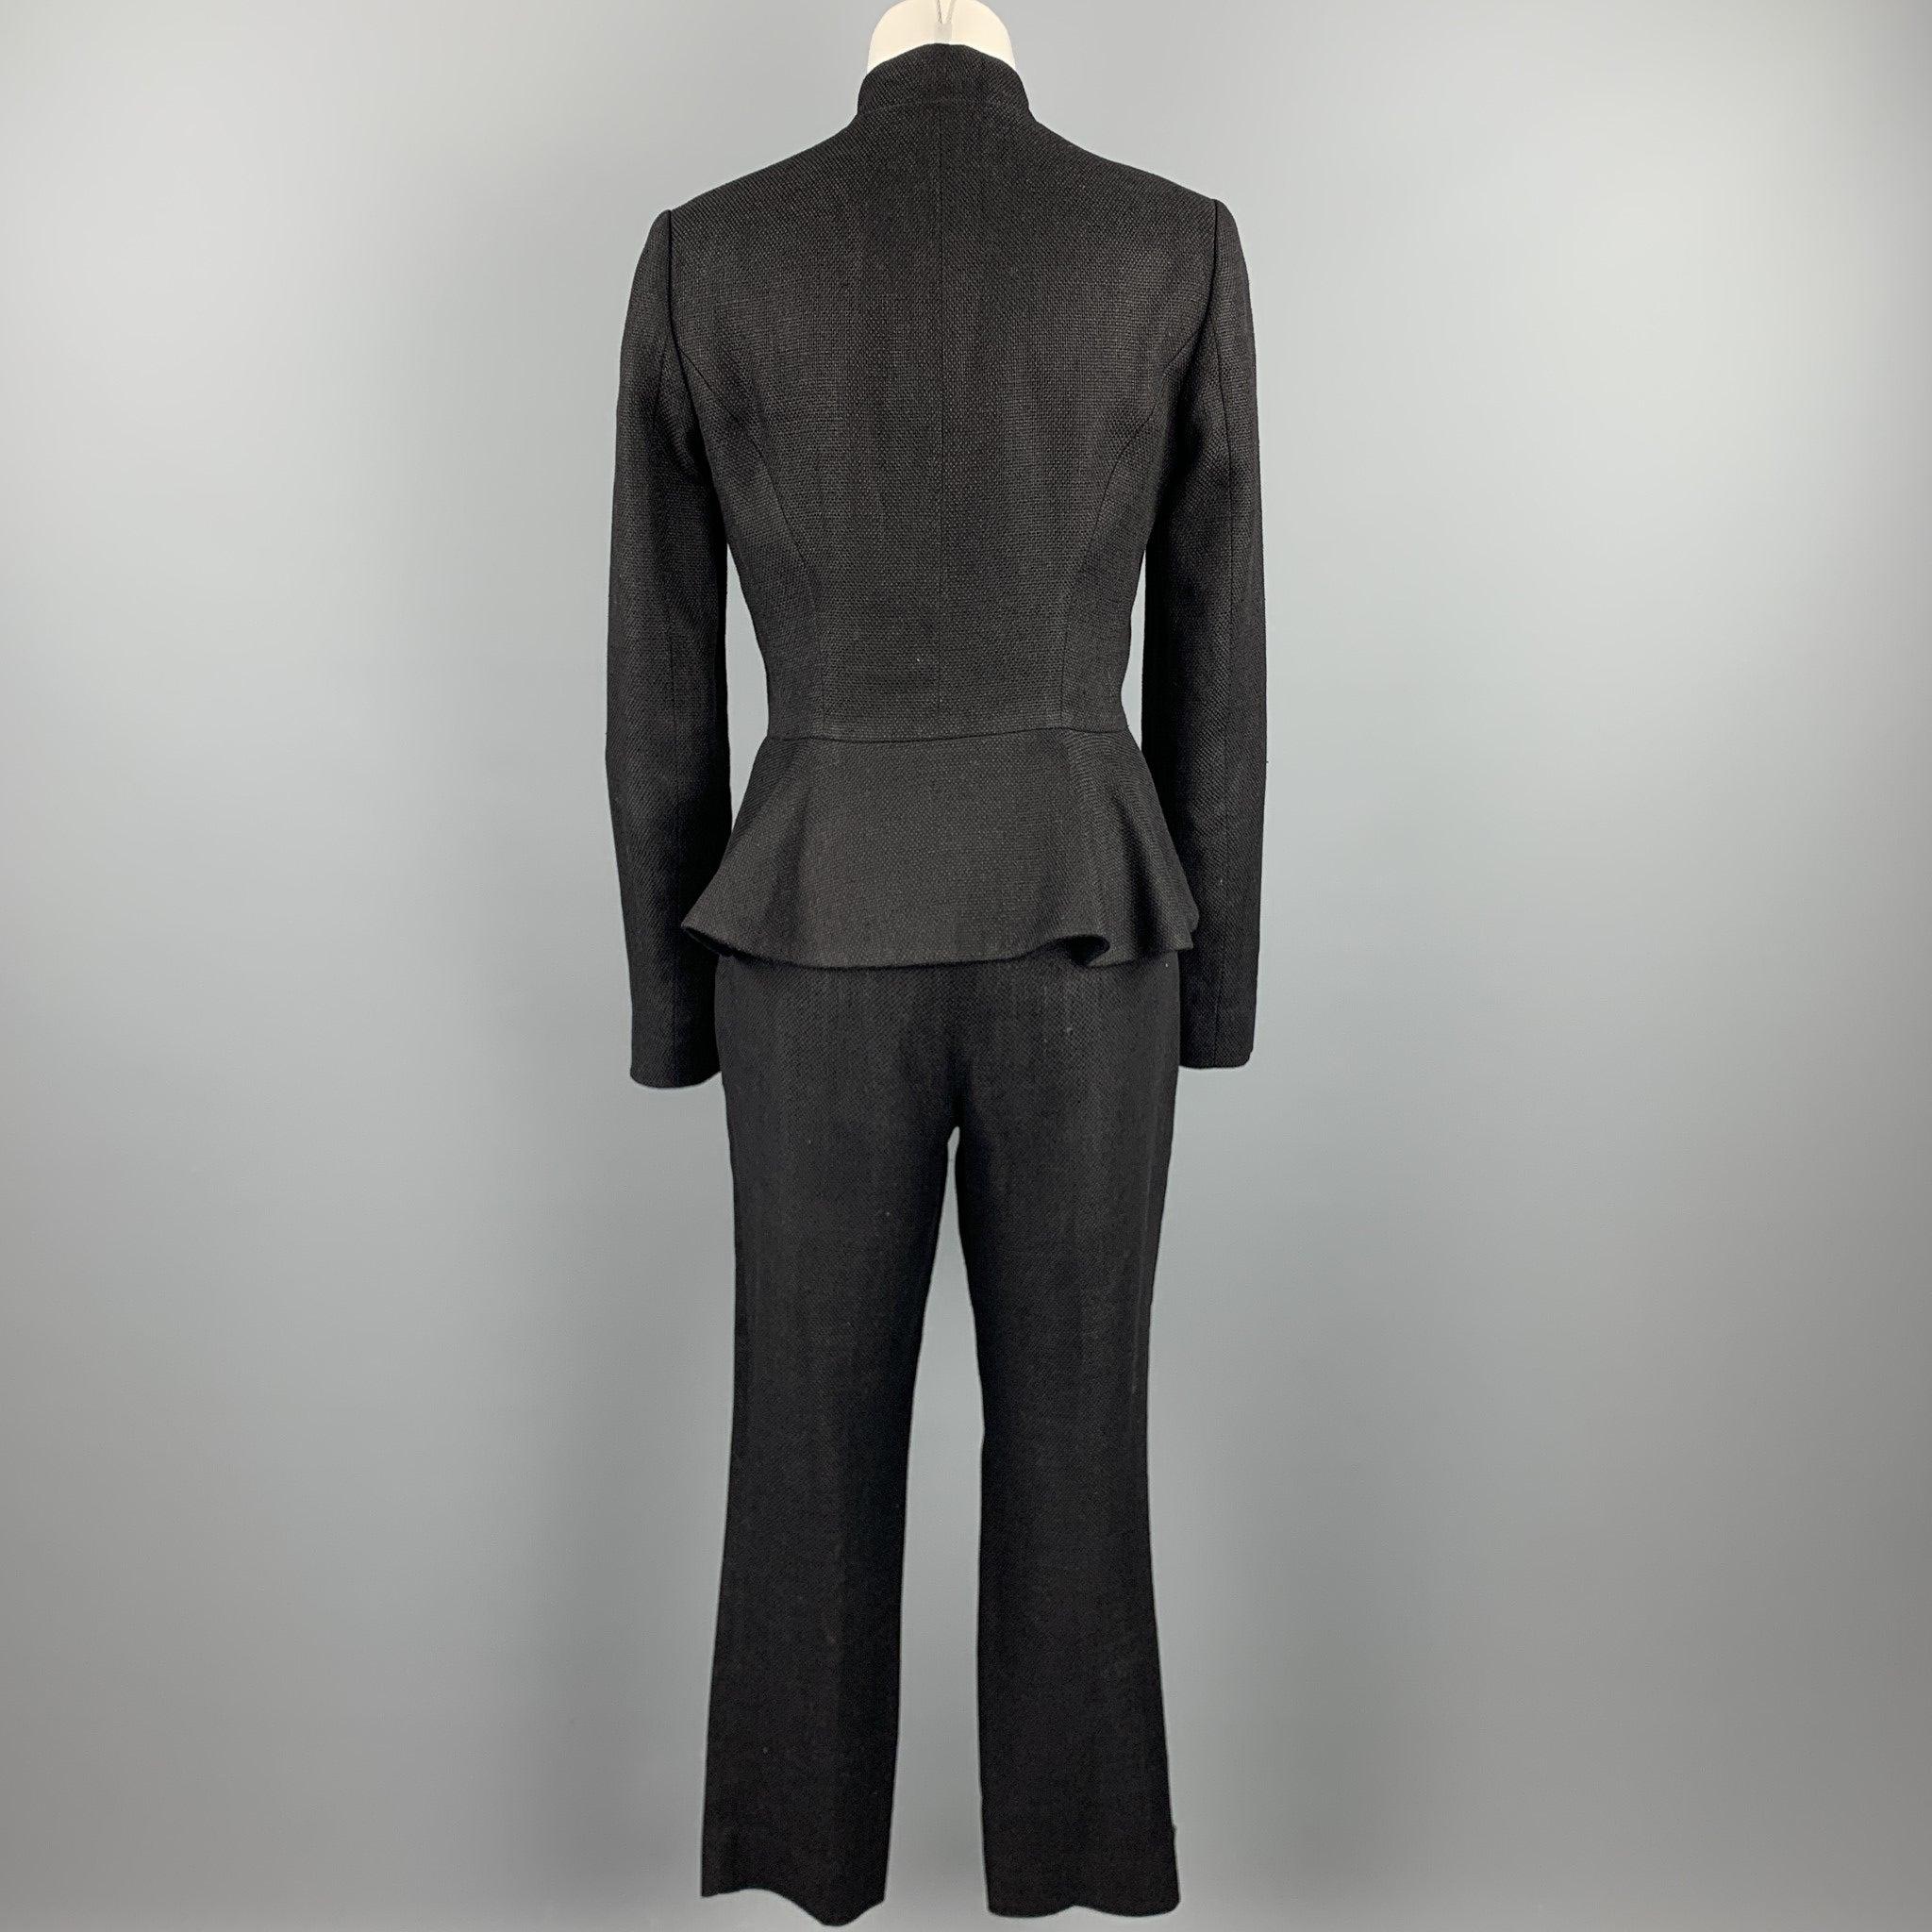 RALPH LAUREN Size 8 Black Woven Linen / Cotton Pants Set In Good Condition For Sale In San Francisco, CA